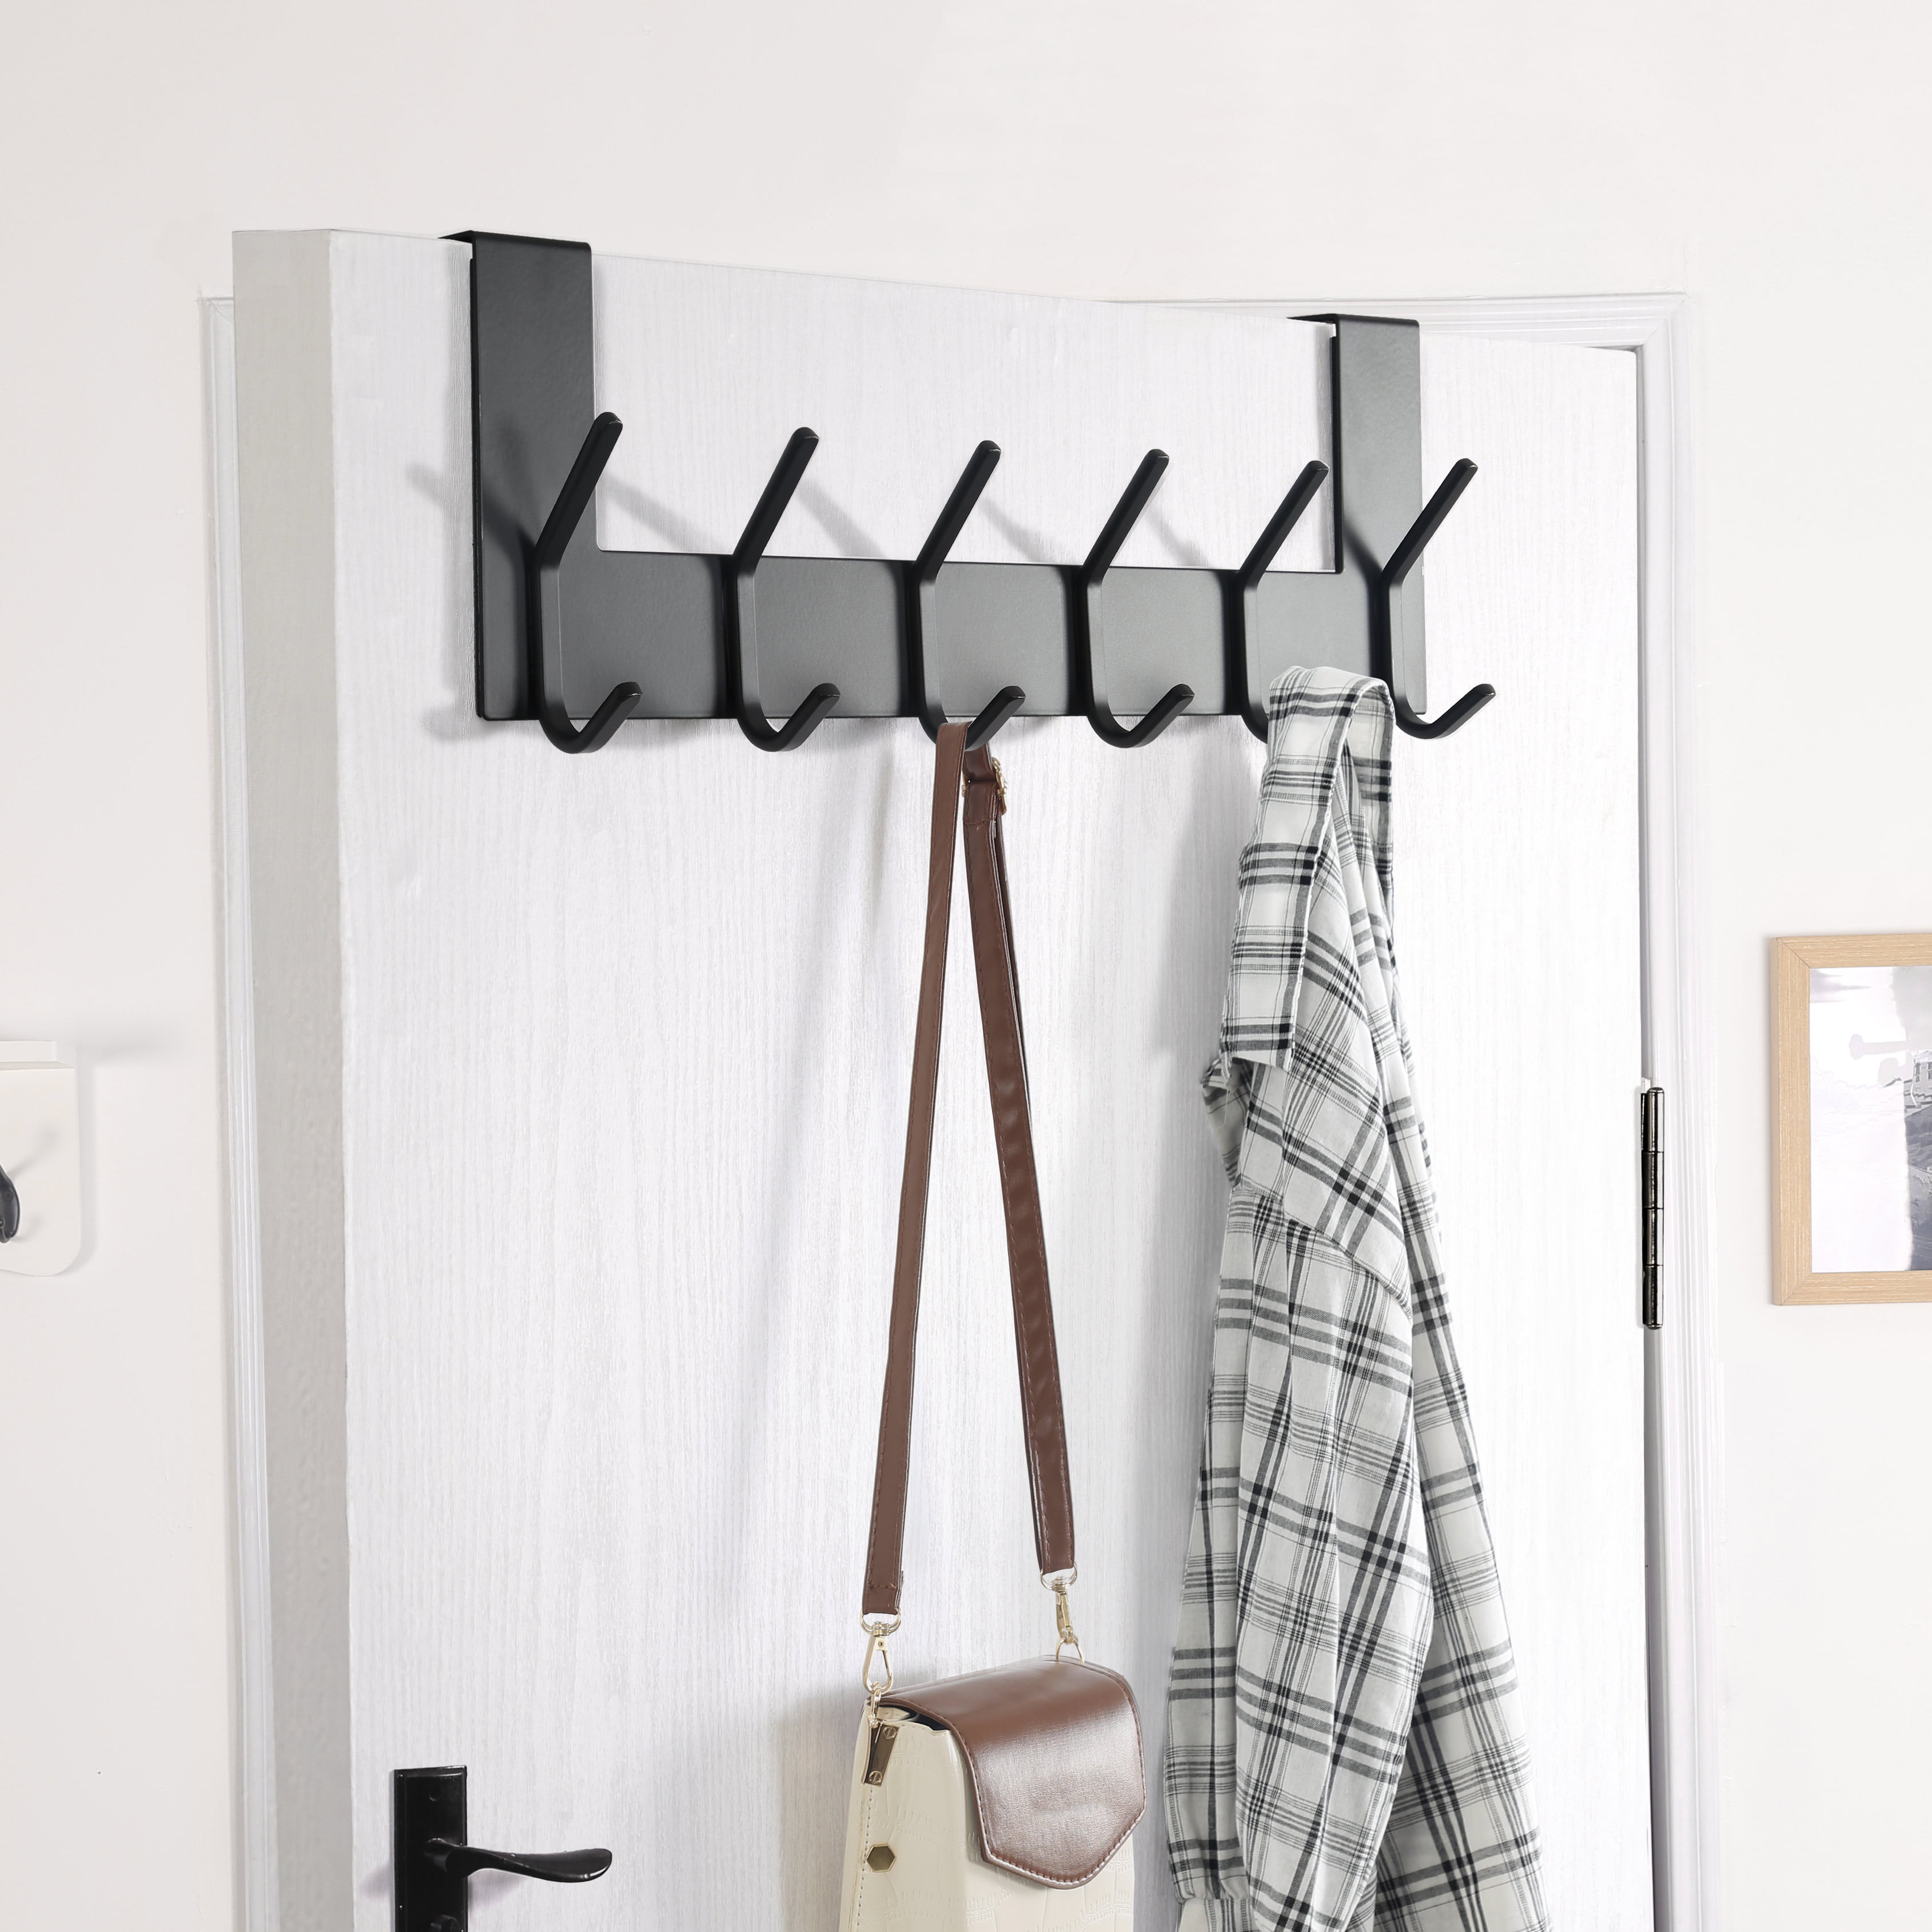 Dseap over the Door Hooks,Sturdy Towel Rack with 6-dual Hooks Hanger for  over Door Hanging Clothes,Hat,Towel Coat Rack for Back of Bathroom,Bedroom,Matte  Black 